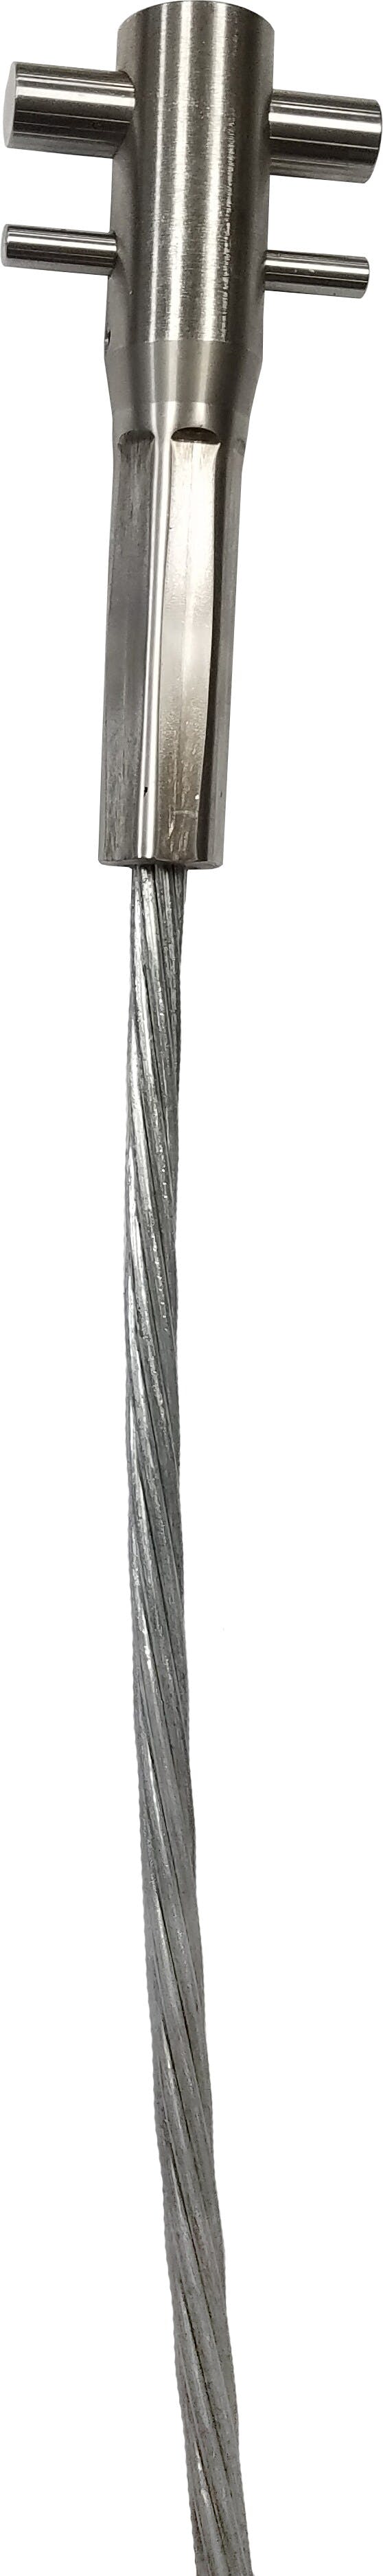 3M™ DBI-SALA® Lad-Saf™ Swaged Cable 6115027, 3/8 Inch, Galvanized Steel, 110 m